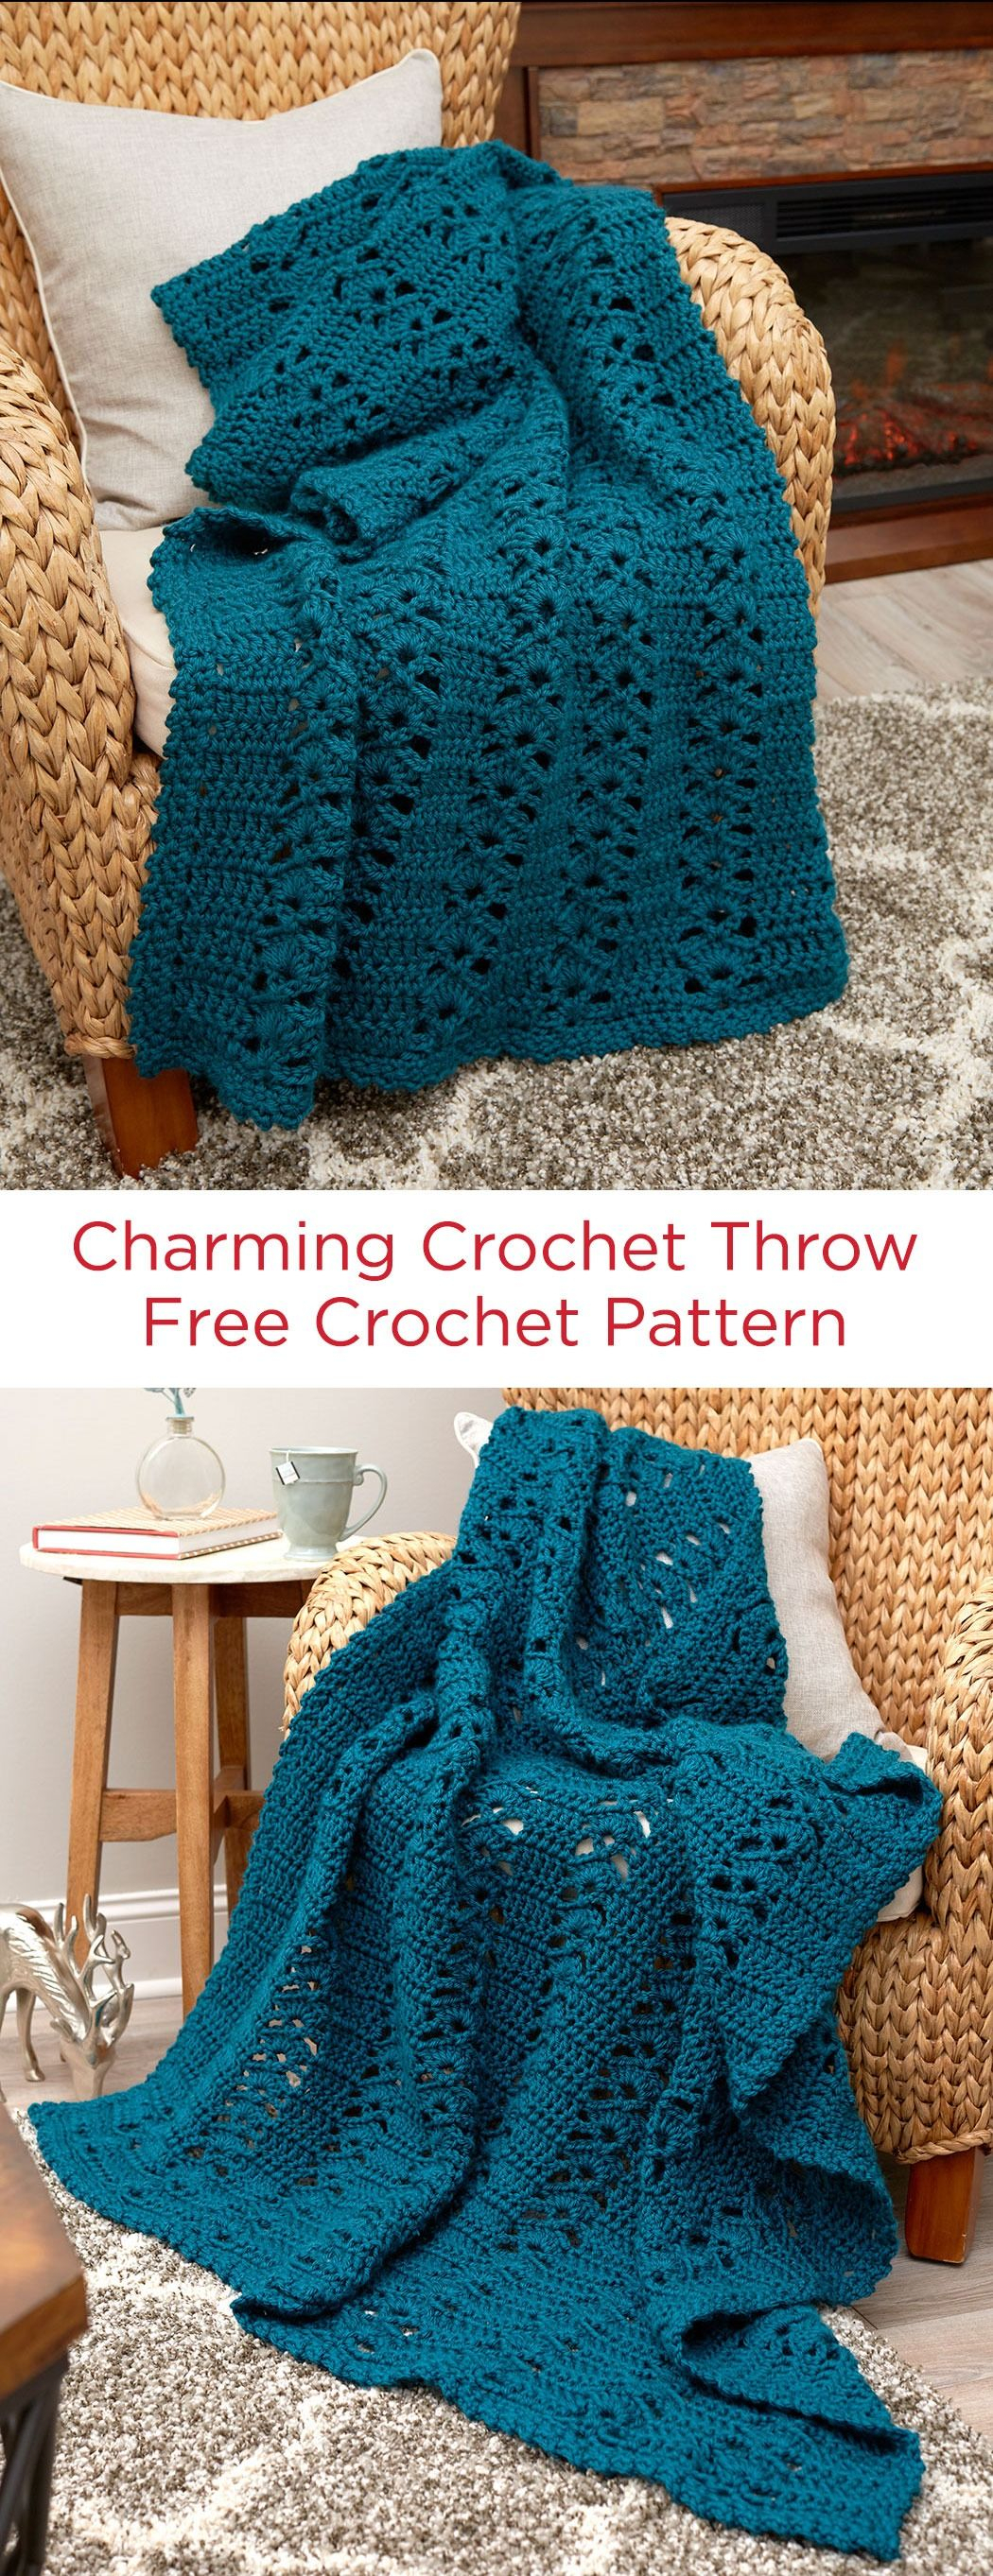 Redheart Free Crochet Patterns Charming Crochet Throw Free Crochet Pattern In Red Heart Soft